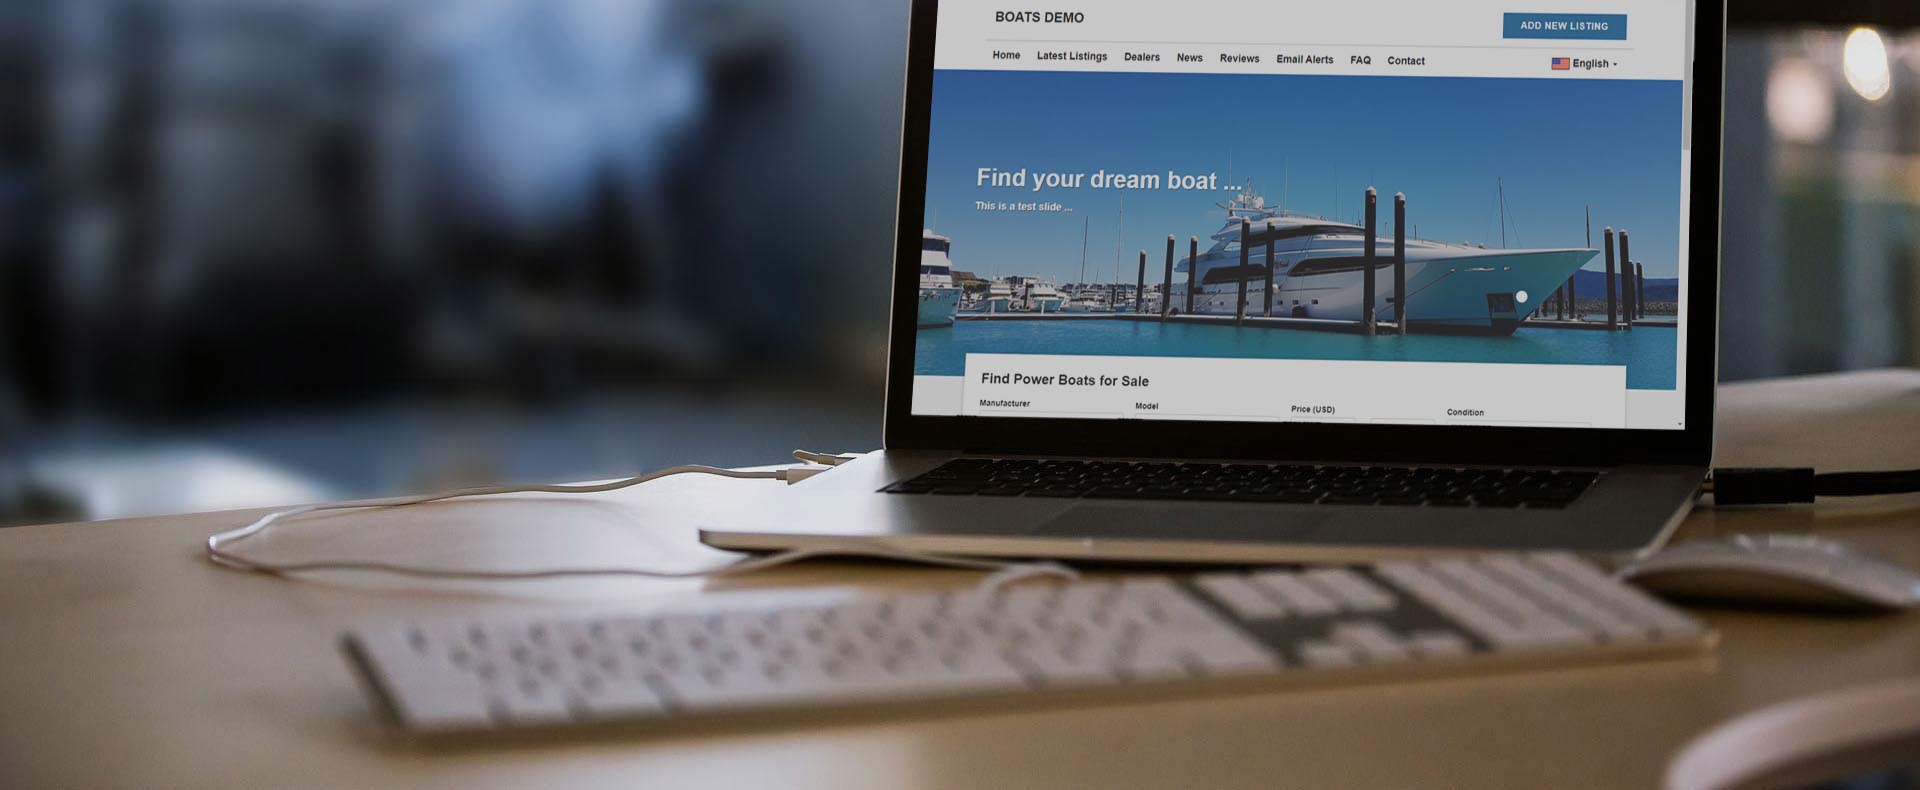 boat portal online demos php boat classifieds script 